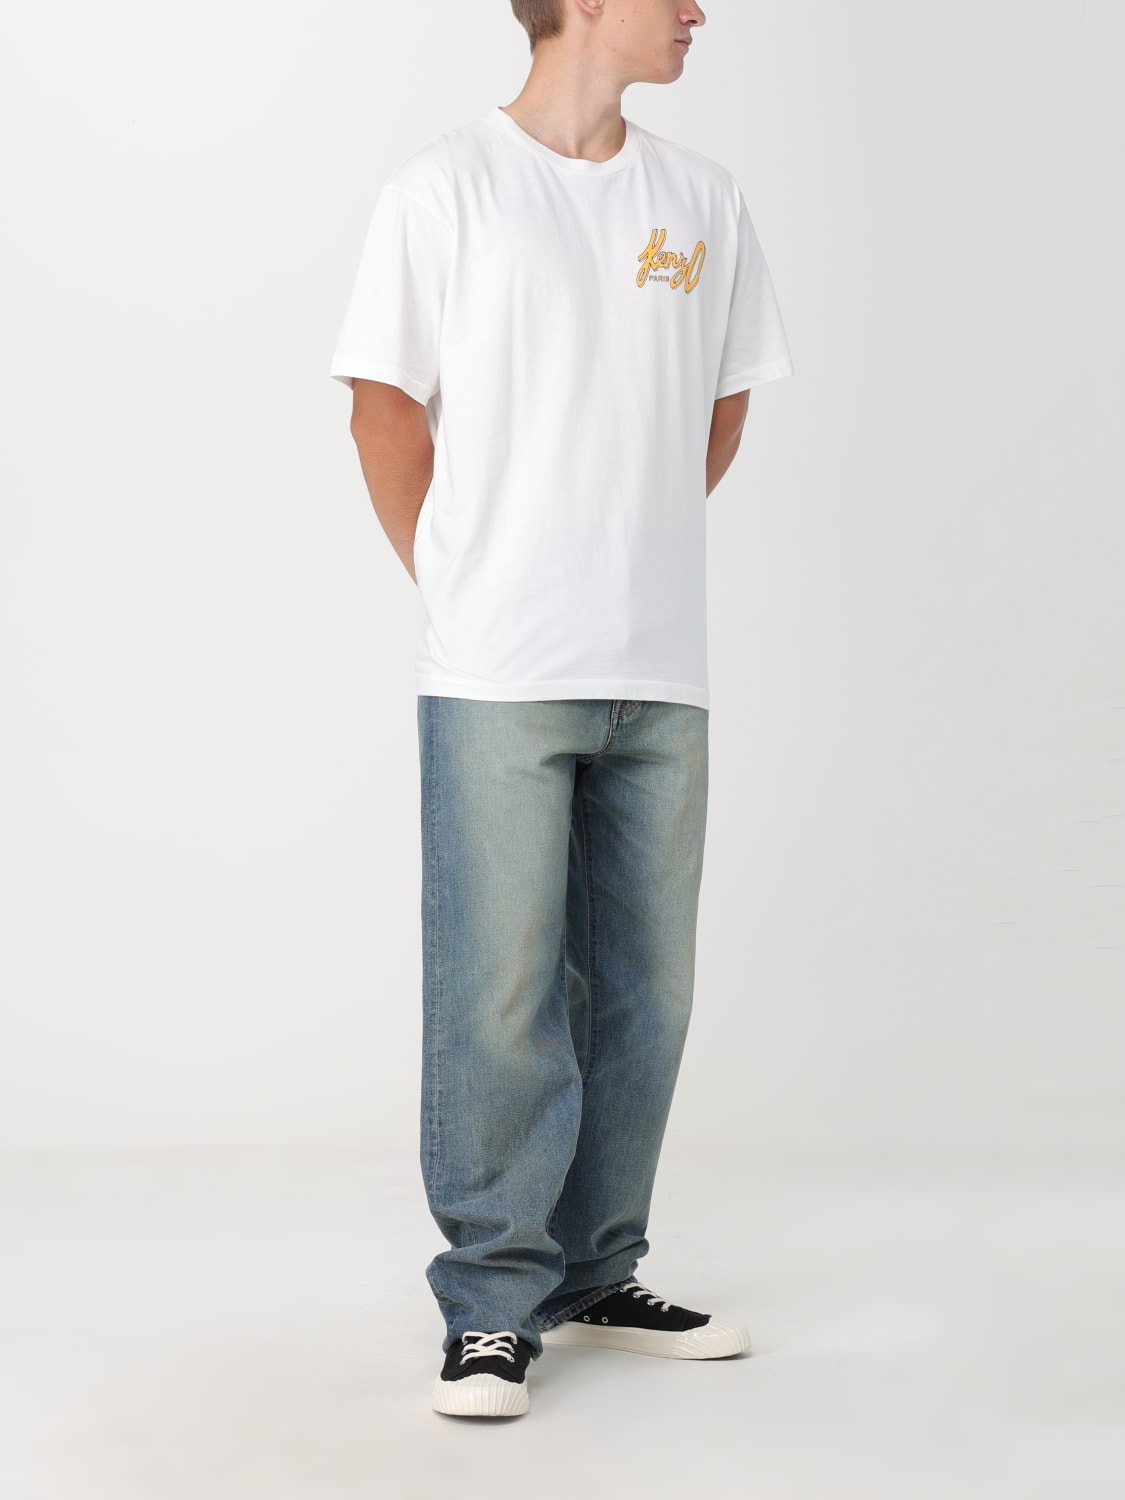 KENZO: cotton t-shirt with Archive print - White | KENZO t-shirt ...